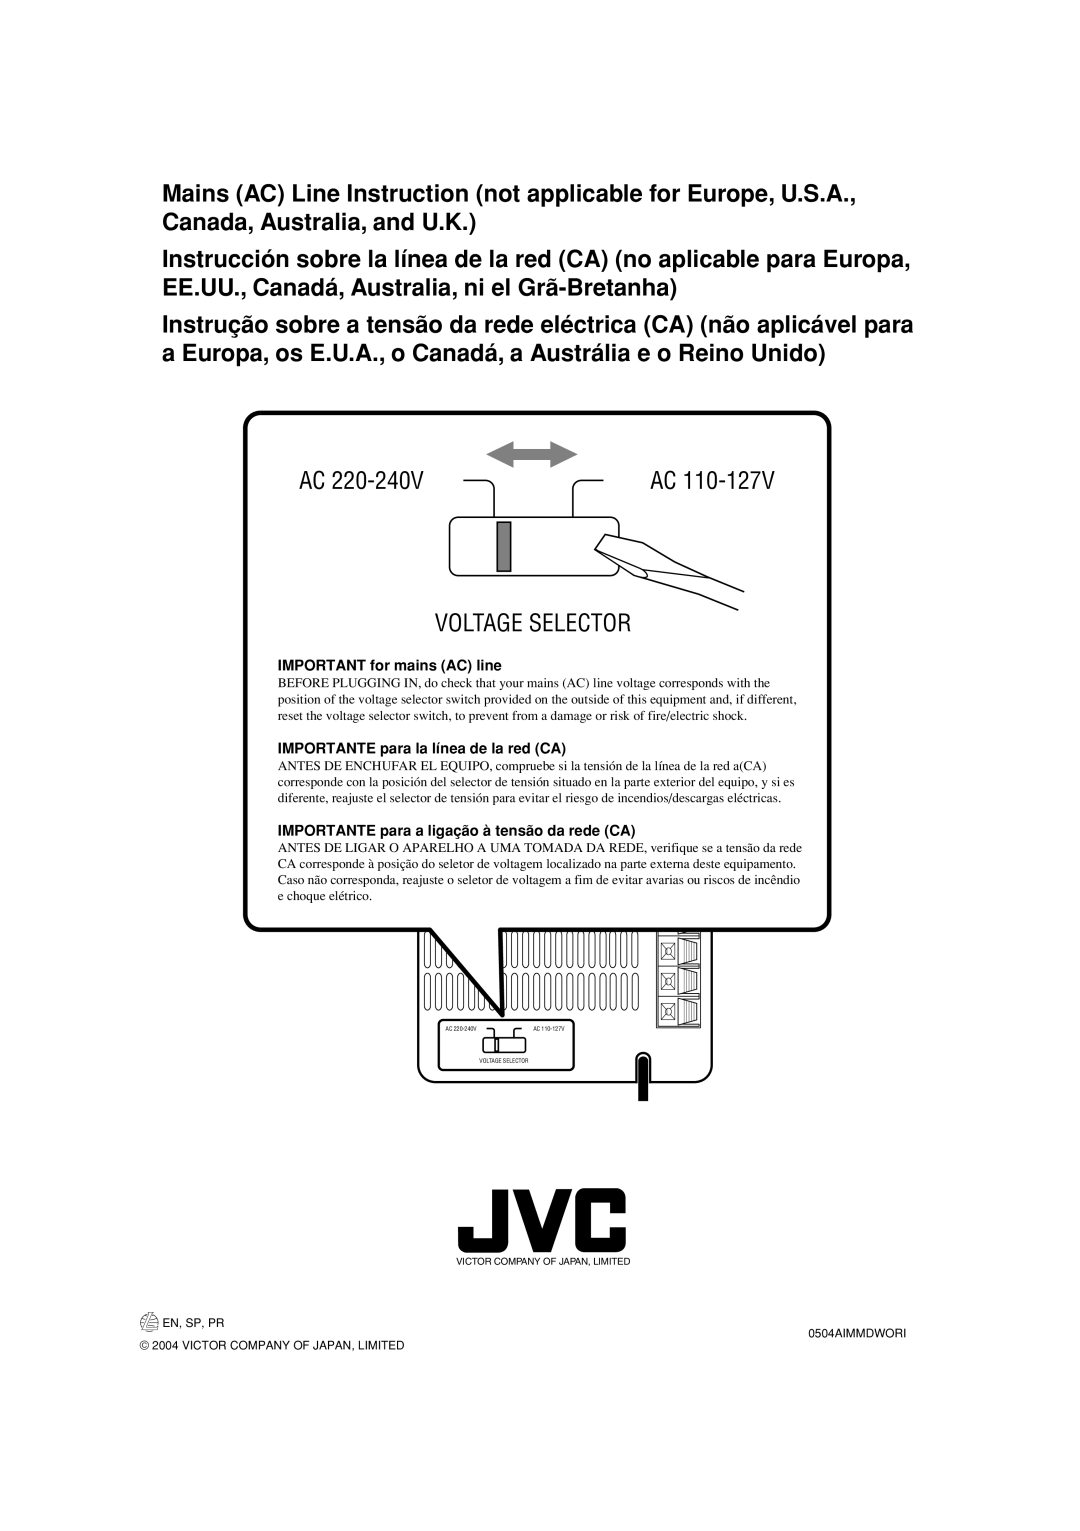 JVC UX-H300 manual IMPORTANT for mains AC line, IMPORTANTE para la línea de la red CA, EN, SP, PR 0504AIMMDWORI 